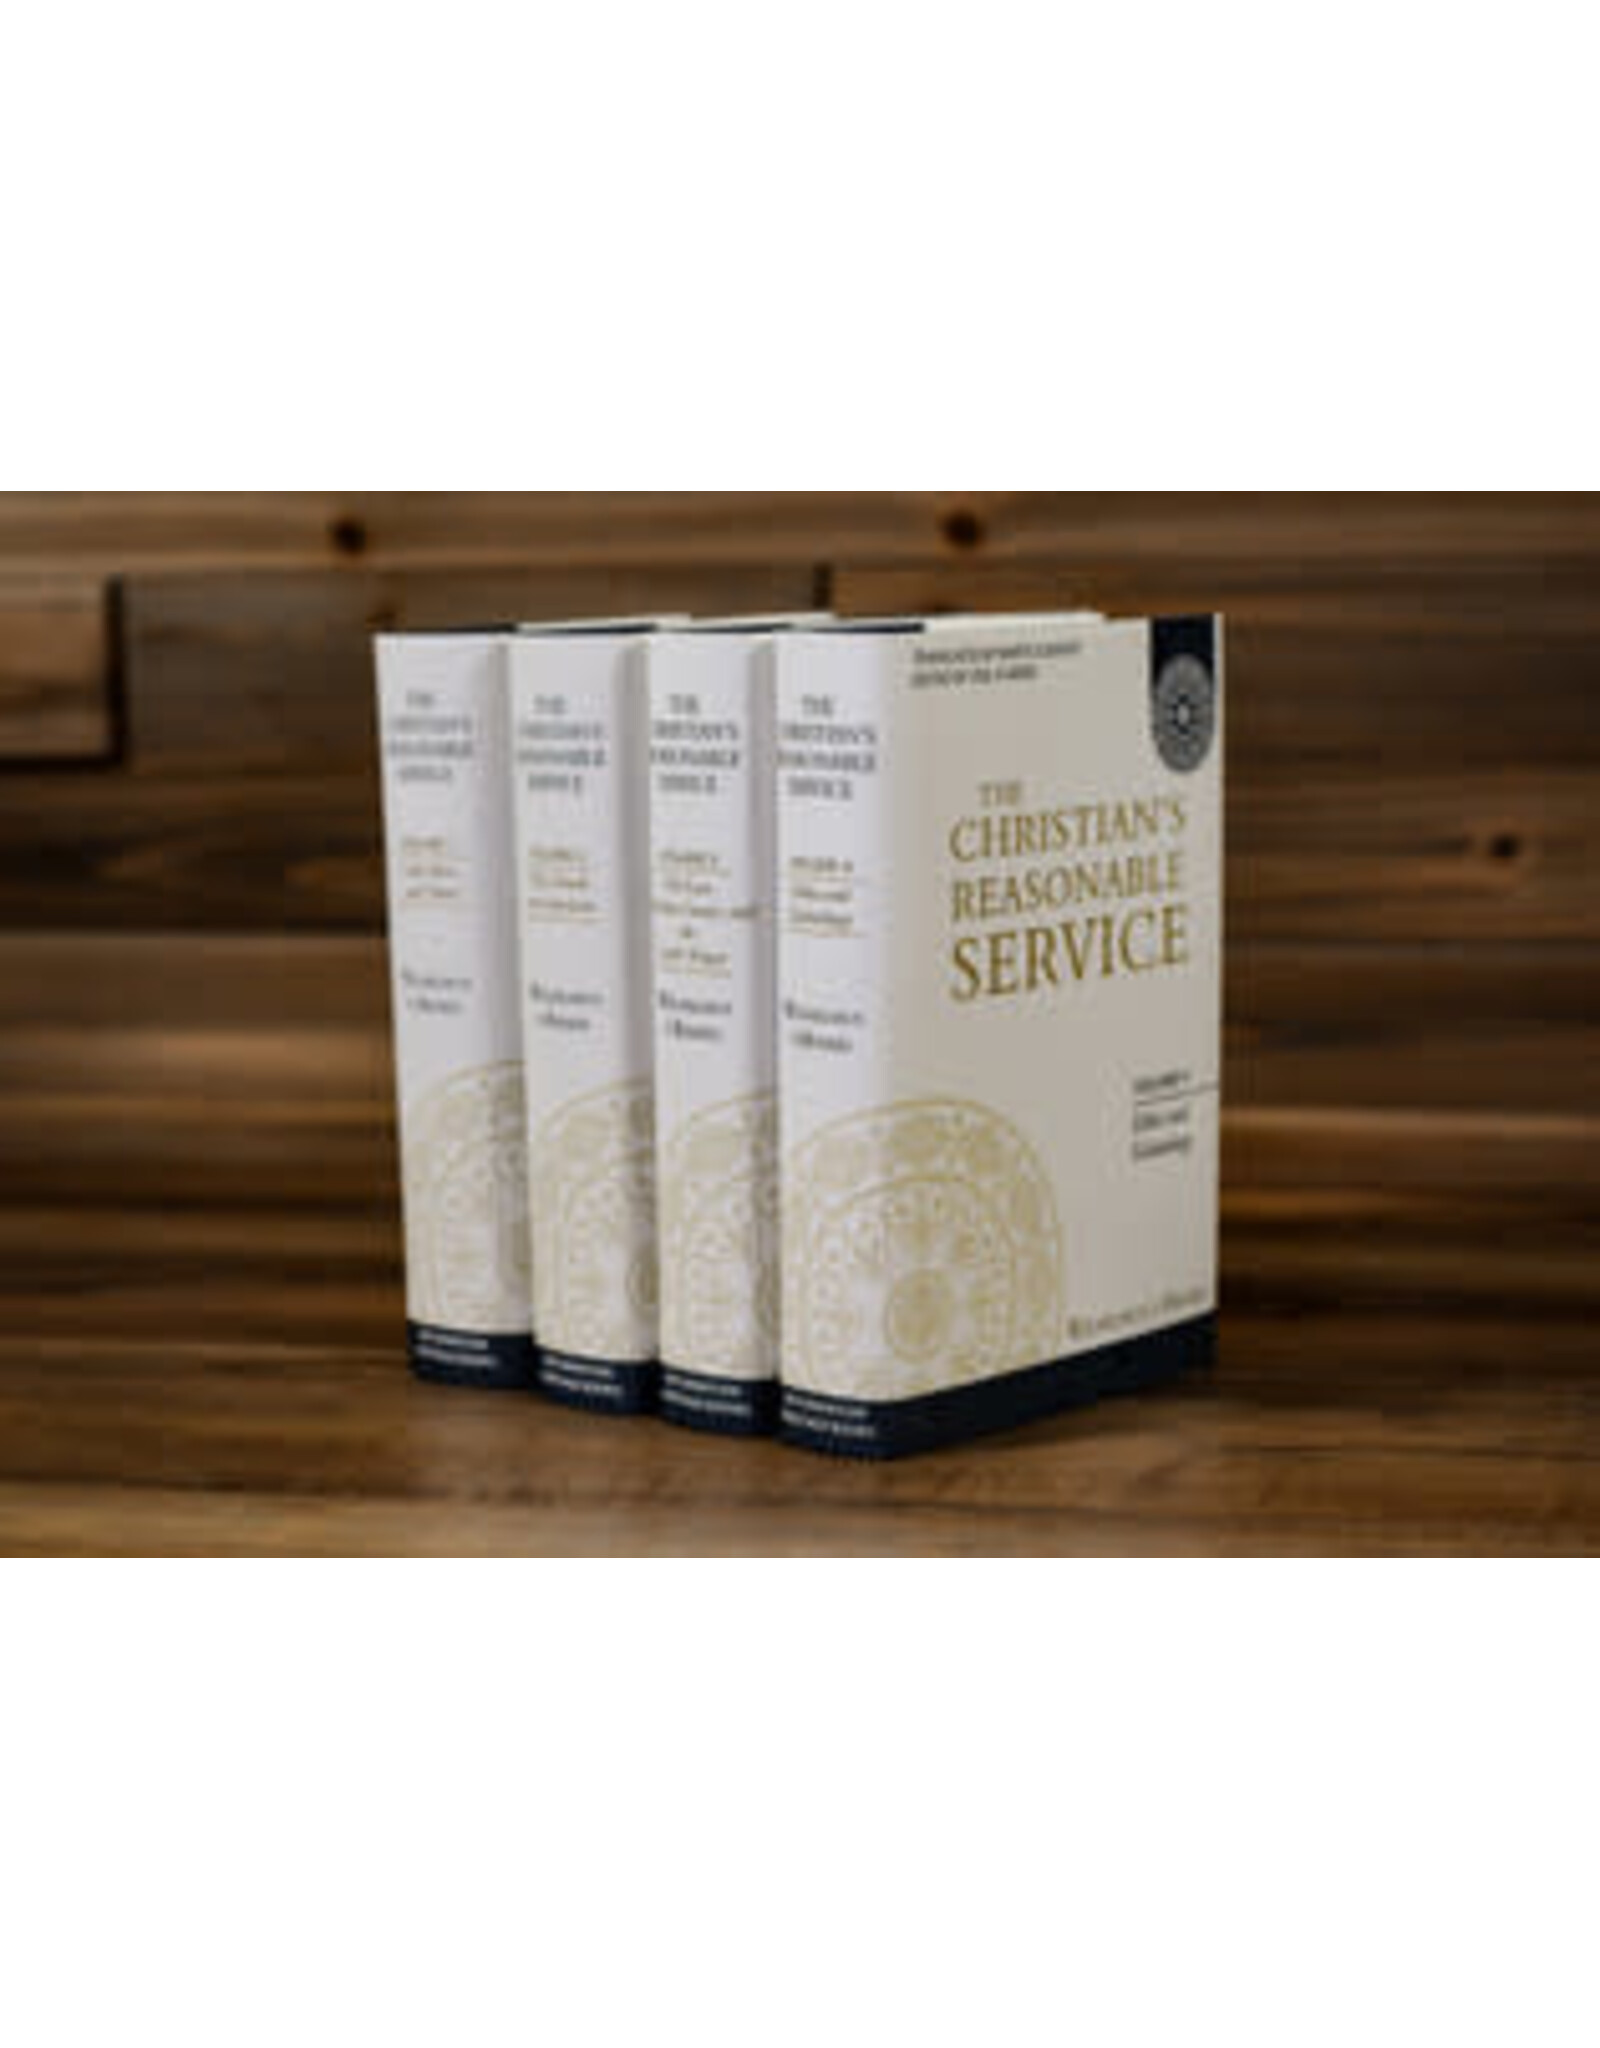 Wilhemis A Brakel The Christian's Reasonable Service 4 Vol Set